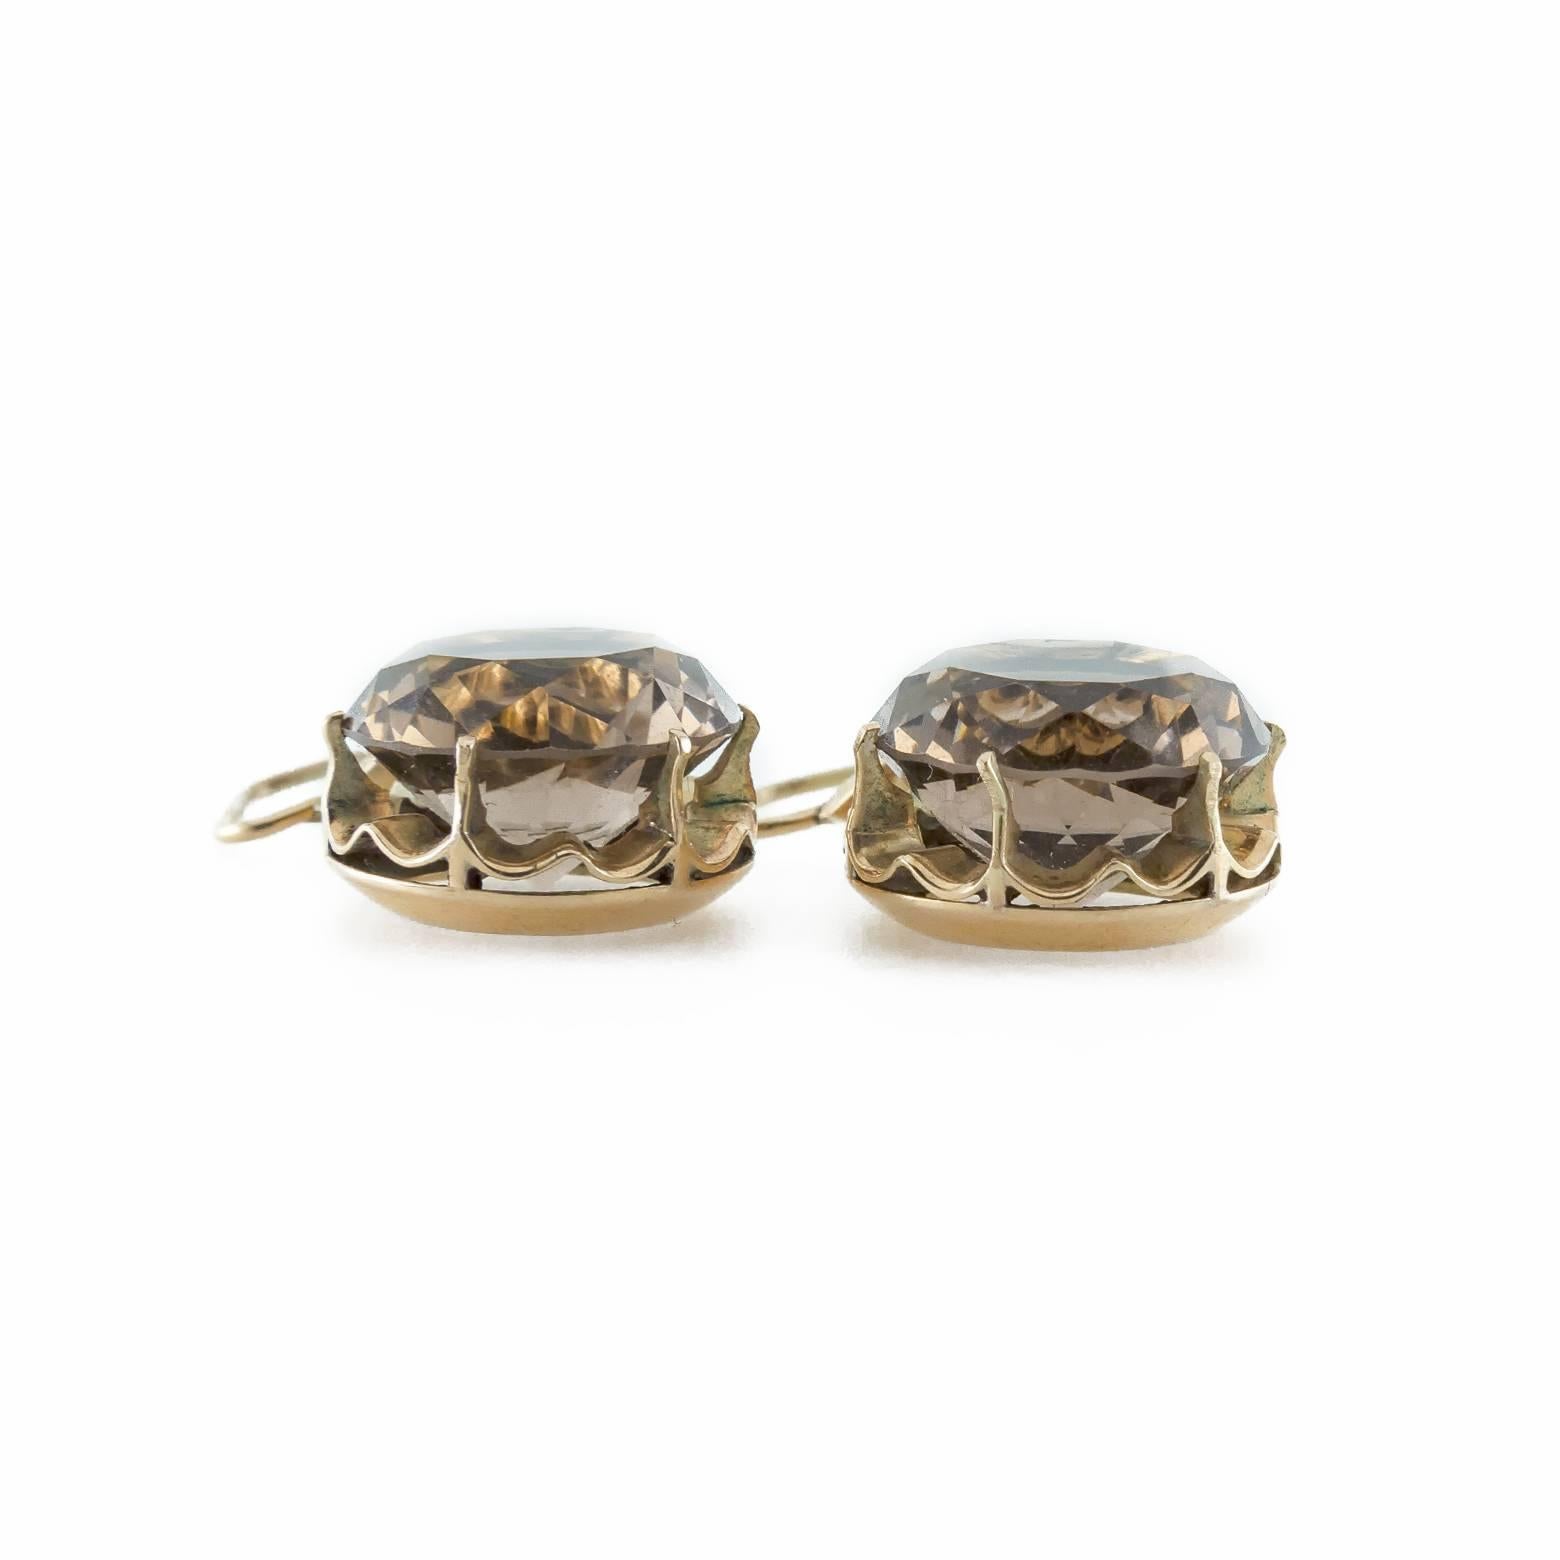 Modern Smokey Quartz Earrings Set in 9 Karat Yellow Gold